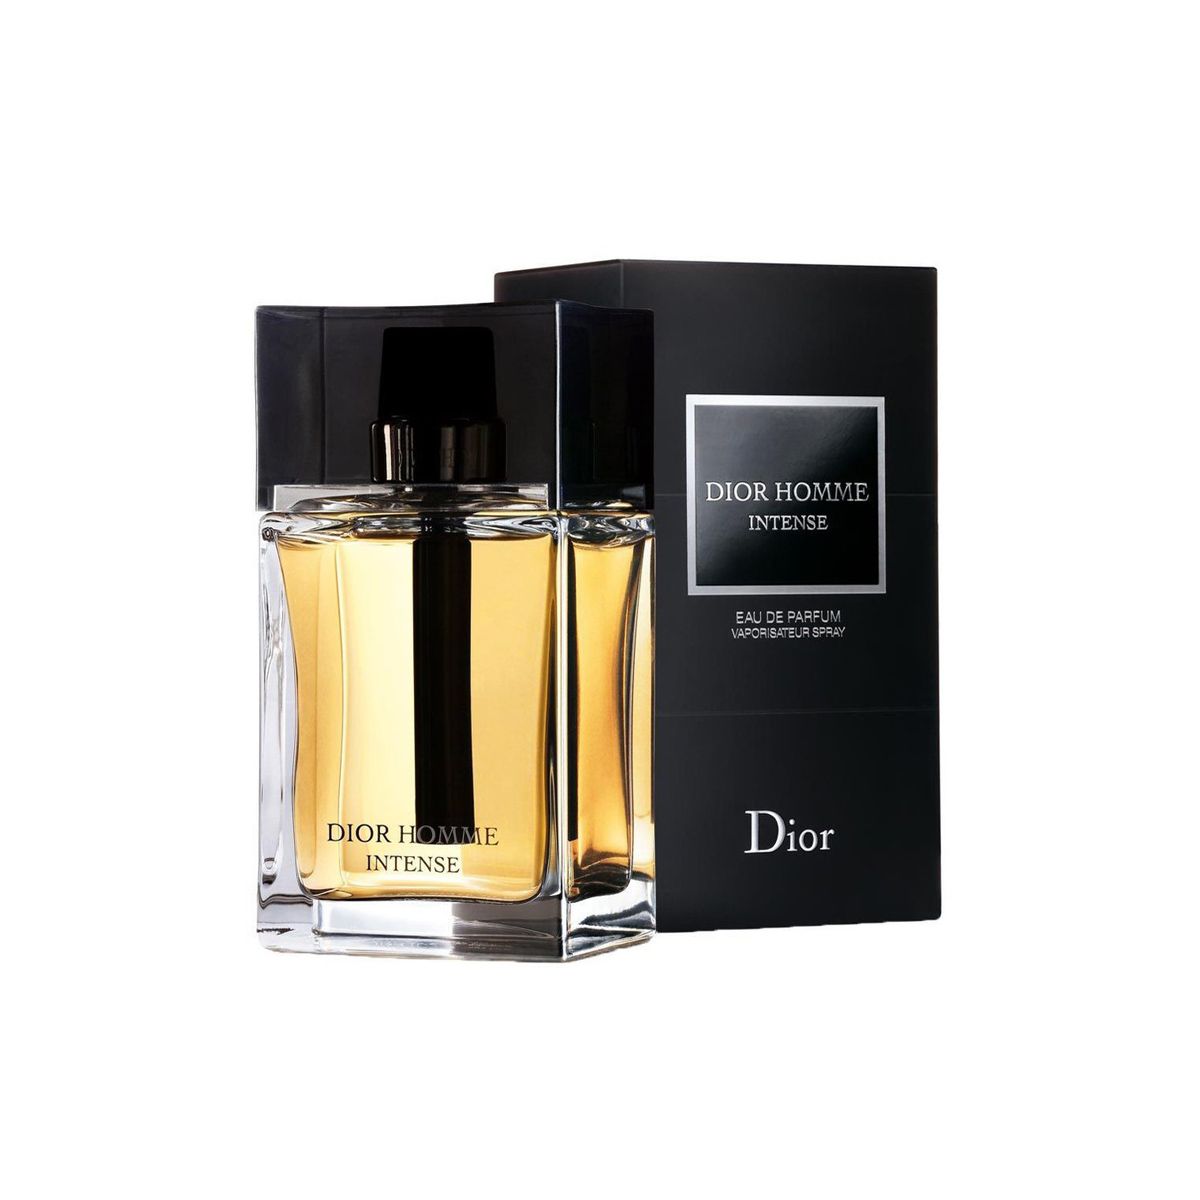 ginder Stad bloem Einde Christian Dior Dior Homme Intense for Men - Eau de Parfum, 100ml – samawa  perfumes